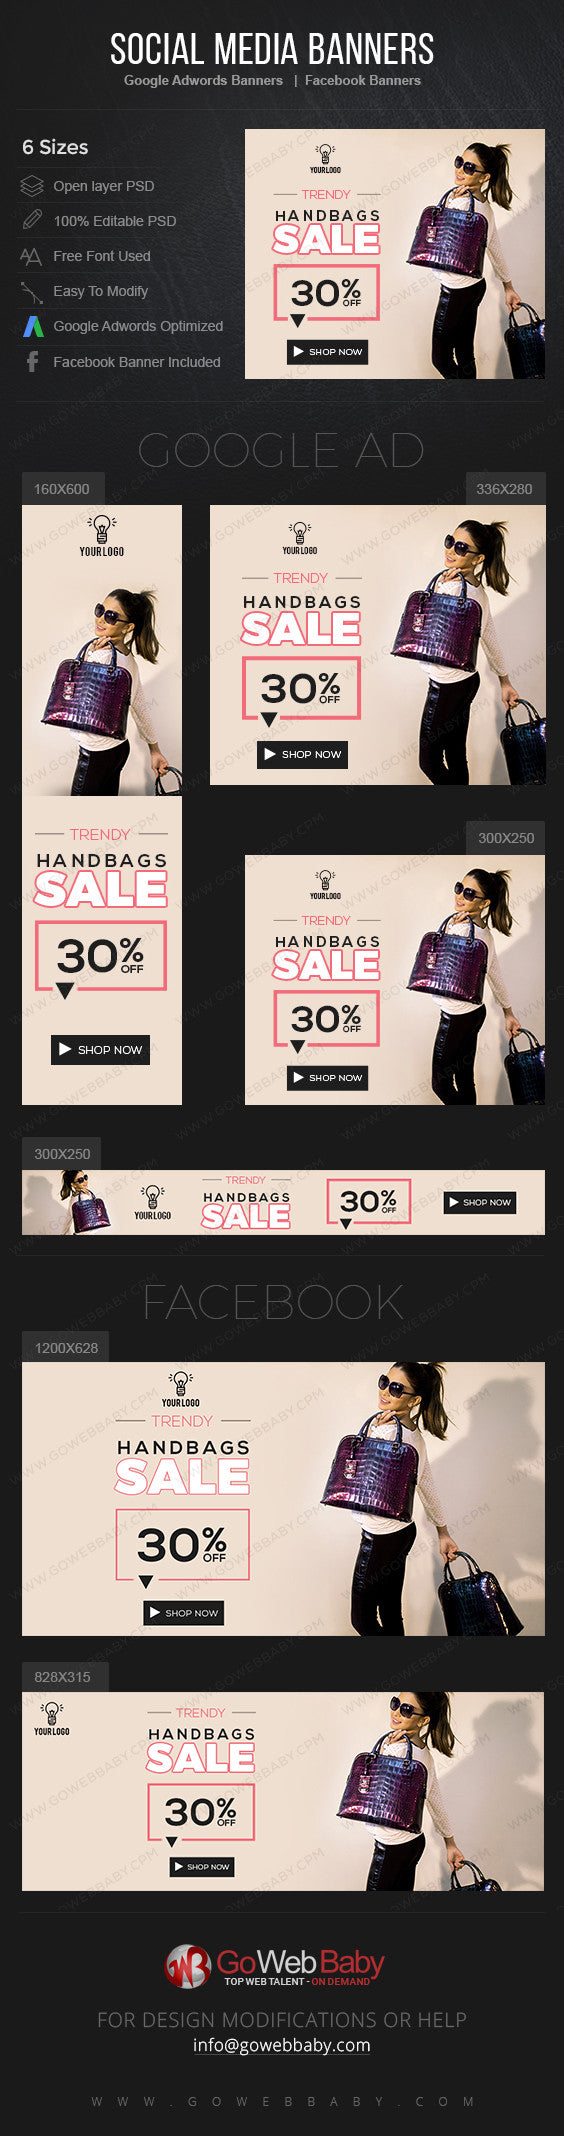 Google Adwords Display Banner with Facebook Banners -Women's Handbags For Website Marketing - GoWebBaby.Com